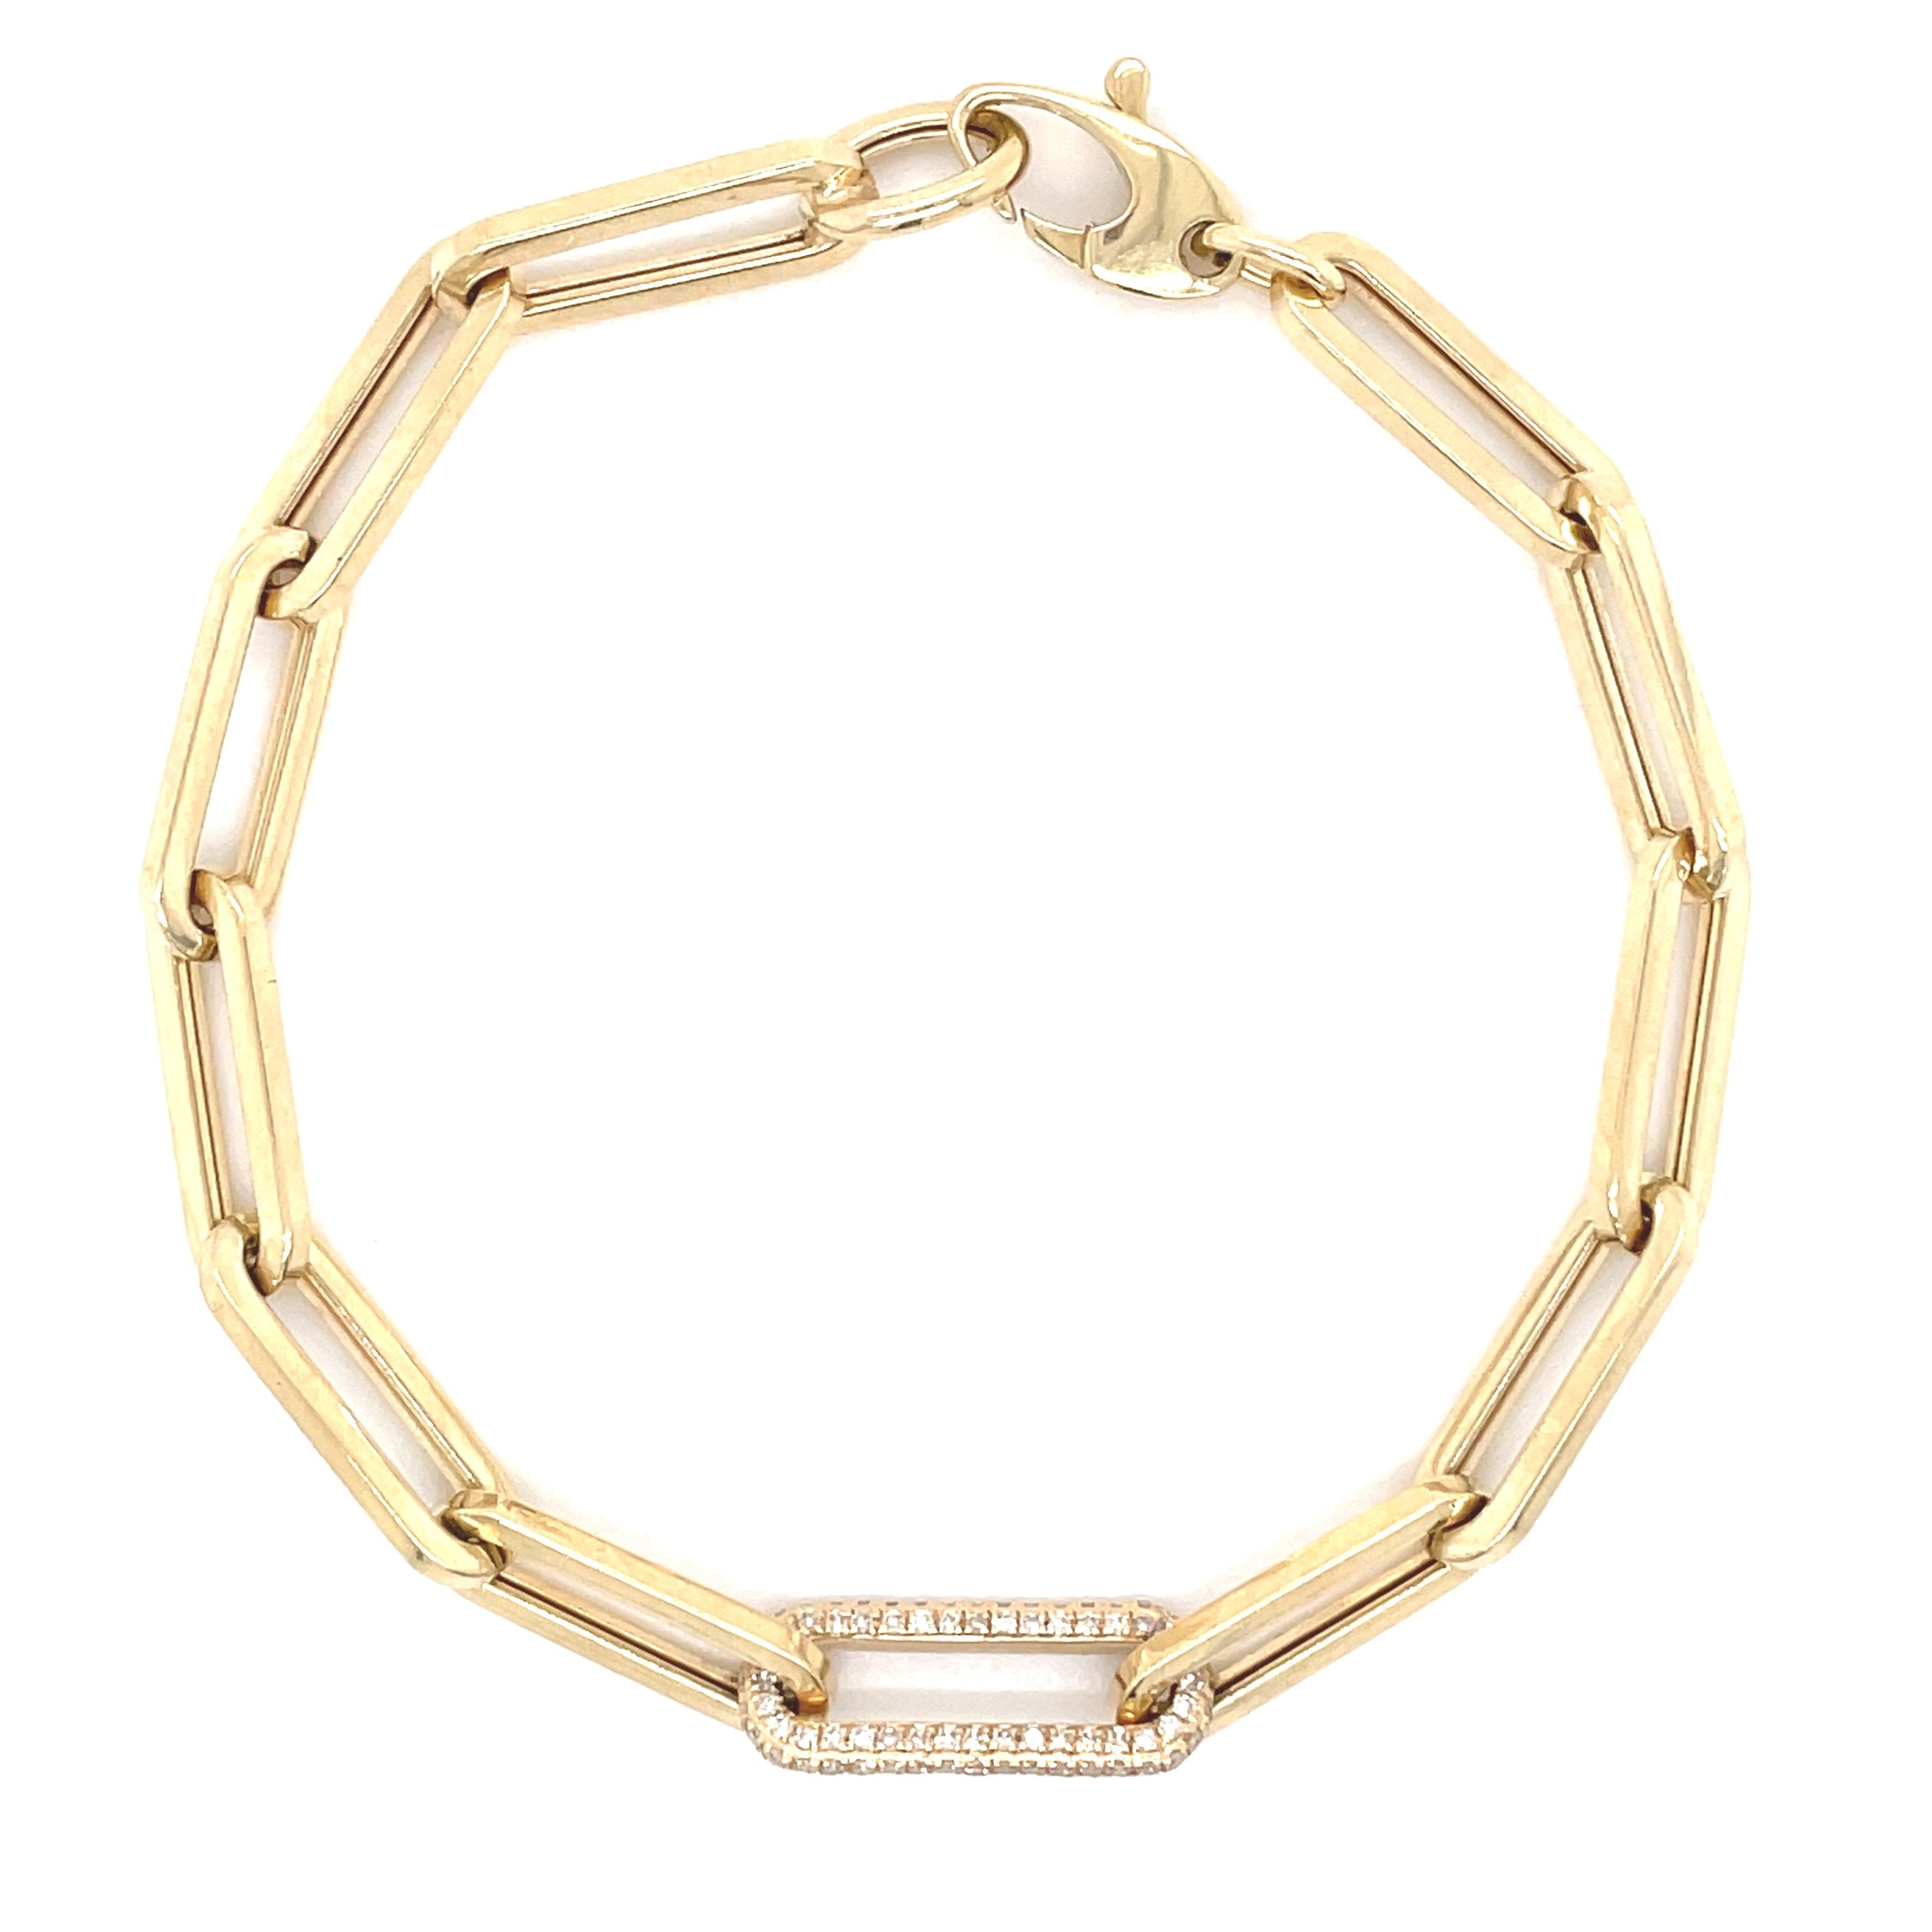 14K Gold Paper Clip Link Chain Bracelet